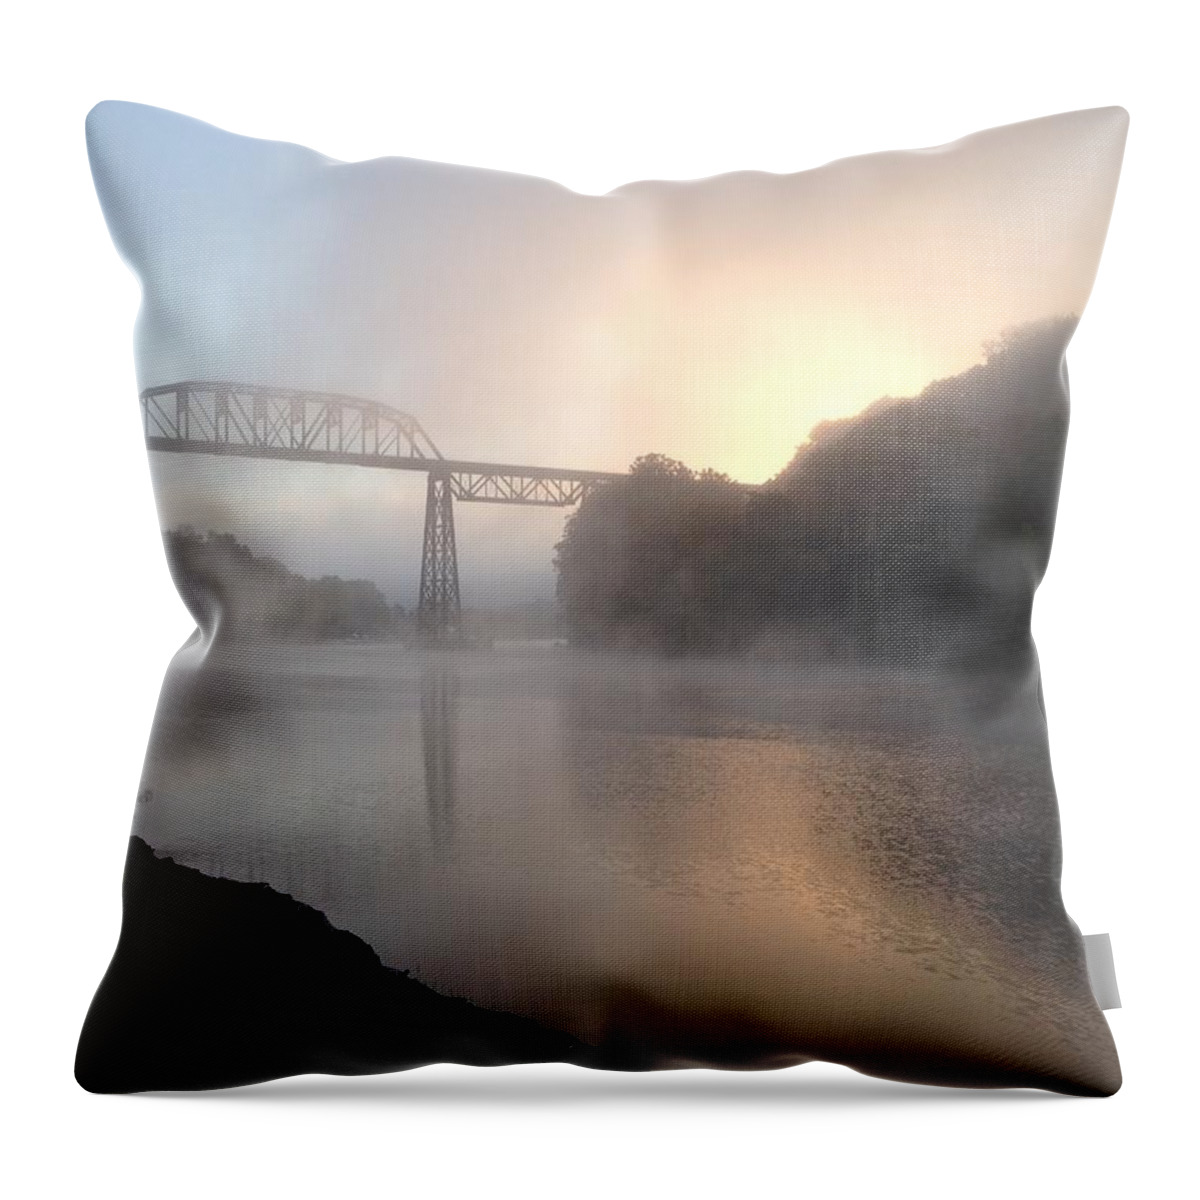 Wilbur Railroad Bridge Throw Pillow featuring the photograph Wilbur CSX Railroad Bridge by Cornelia DeDona